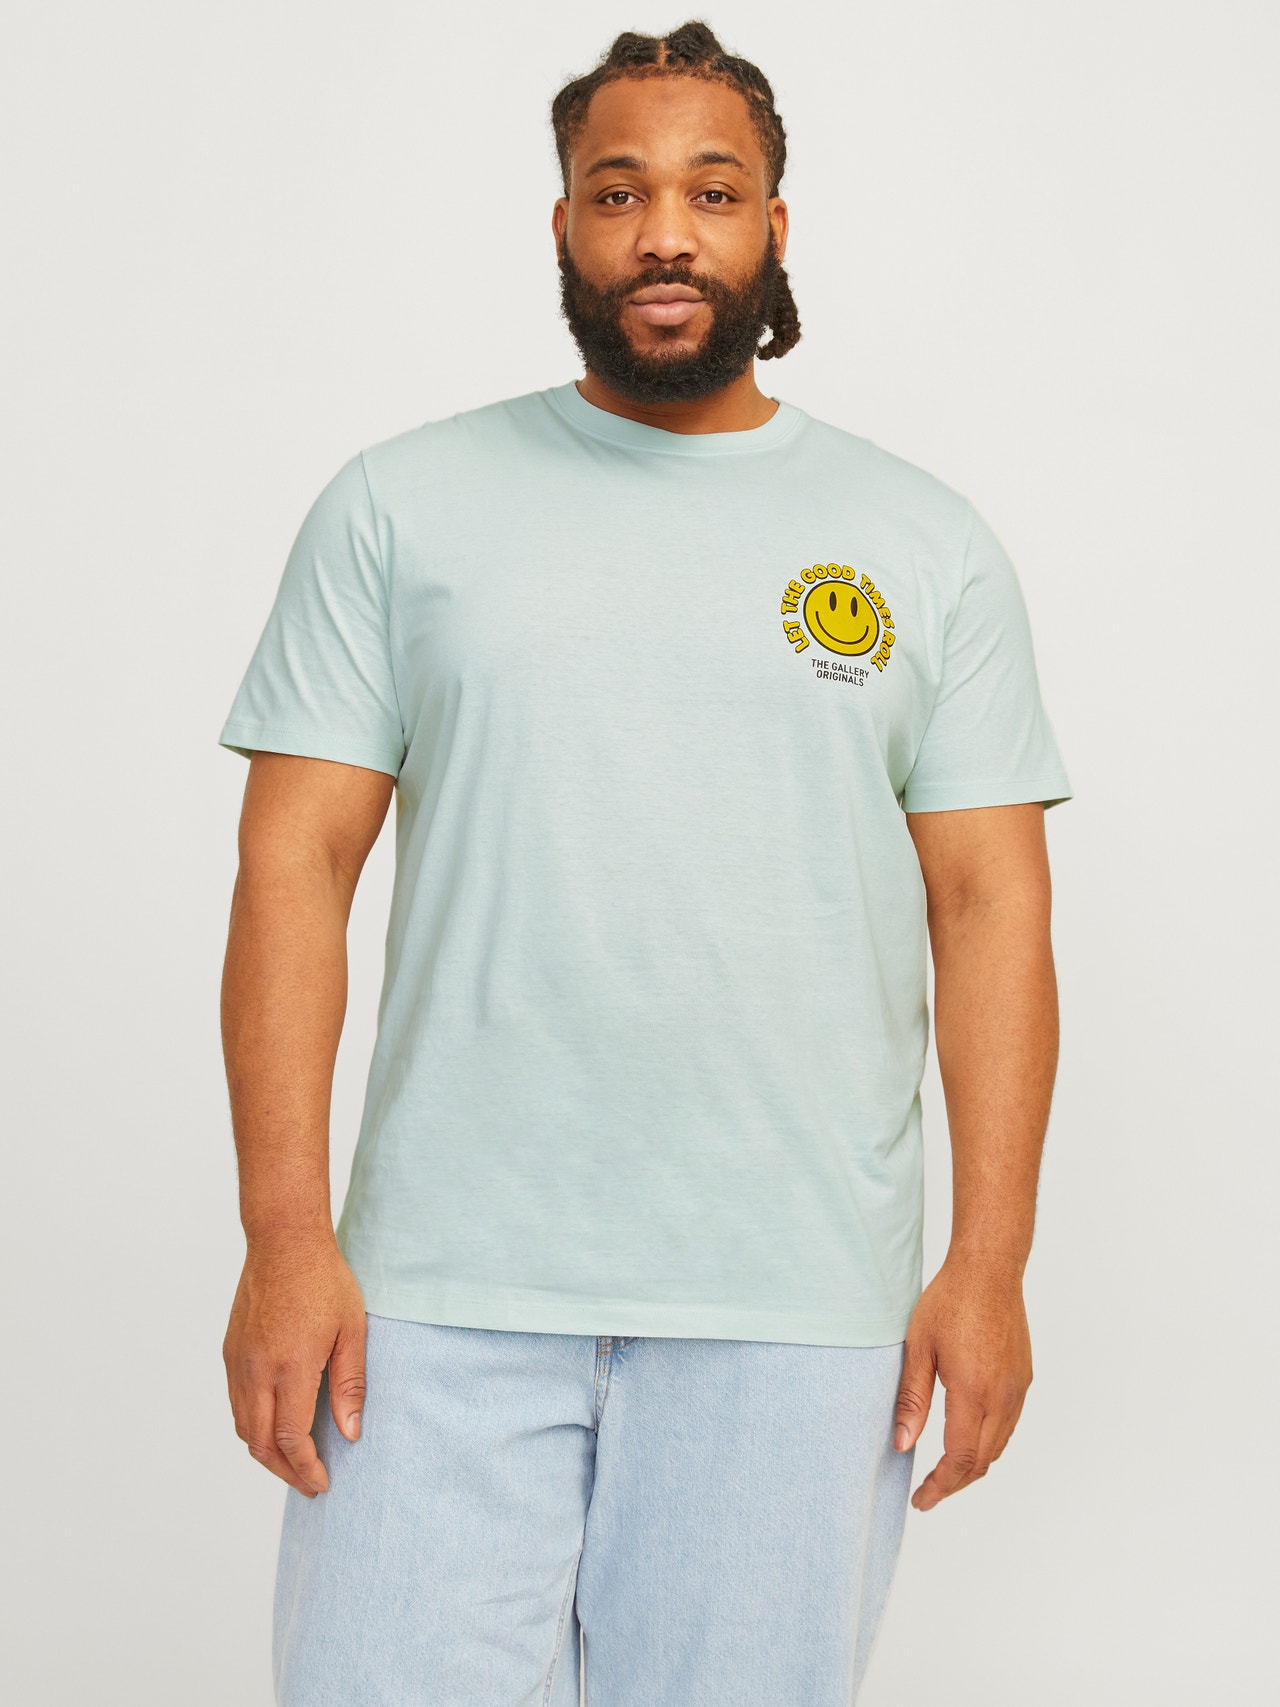 Jack & Jones Plus Size Camiseta Estampado -Skylight - 12261568